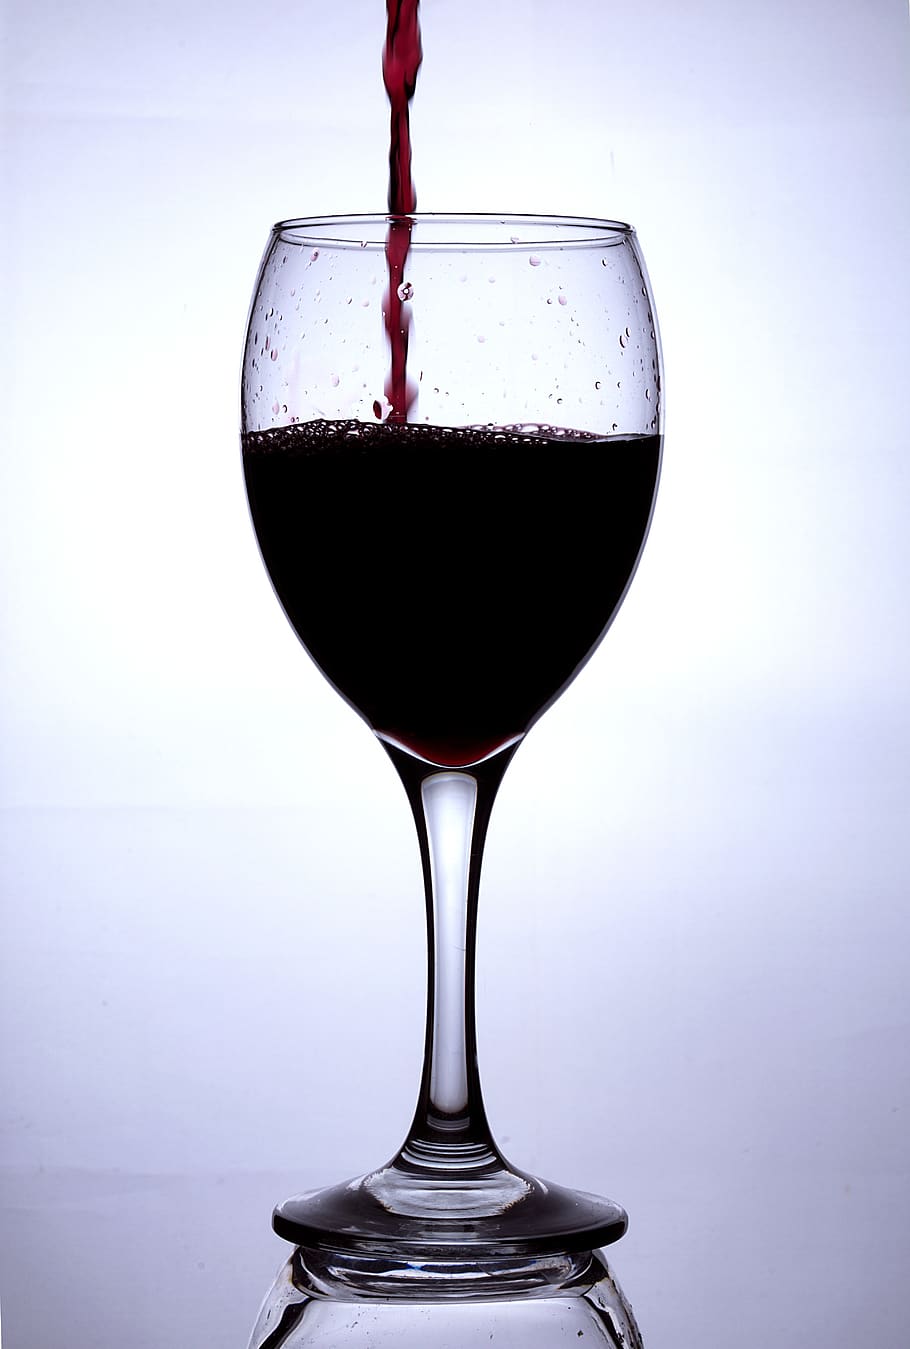 copo de vinho, vinho tinto, vinho, vidro, derramando, ainda vida, bebida, refresco, comida e bebida, álcool